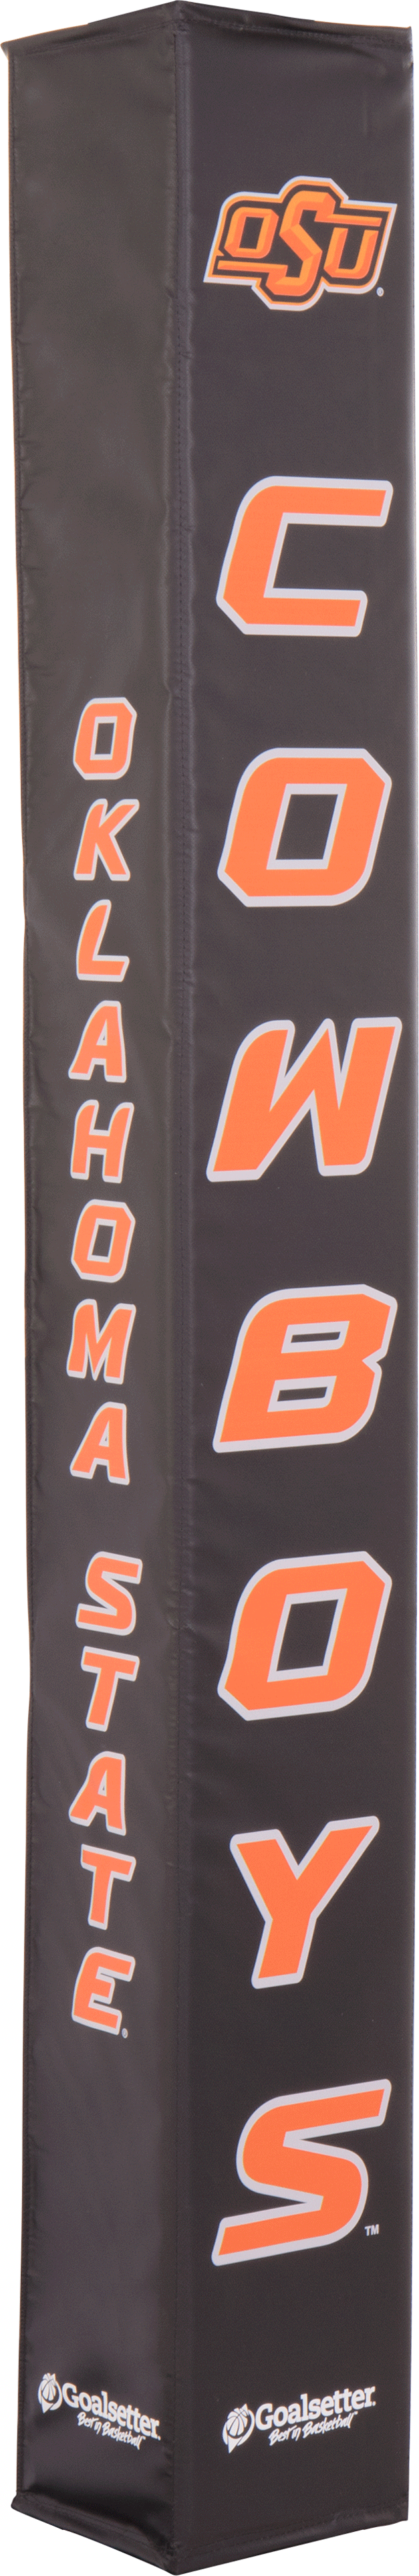 Goalsetter Collegiate Basketball Pole Pad - Oklahoma State Cowboys Basketball (Black)